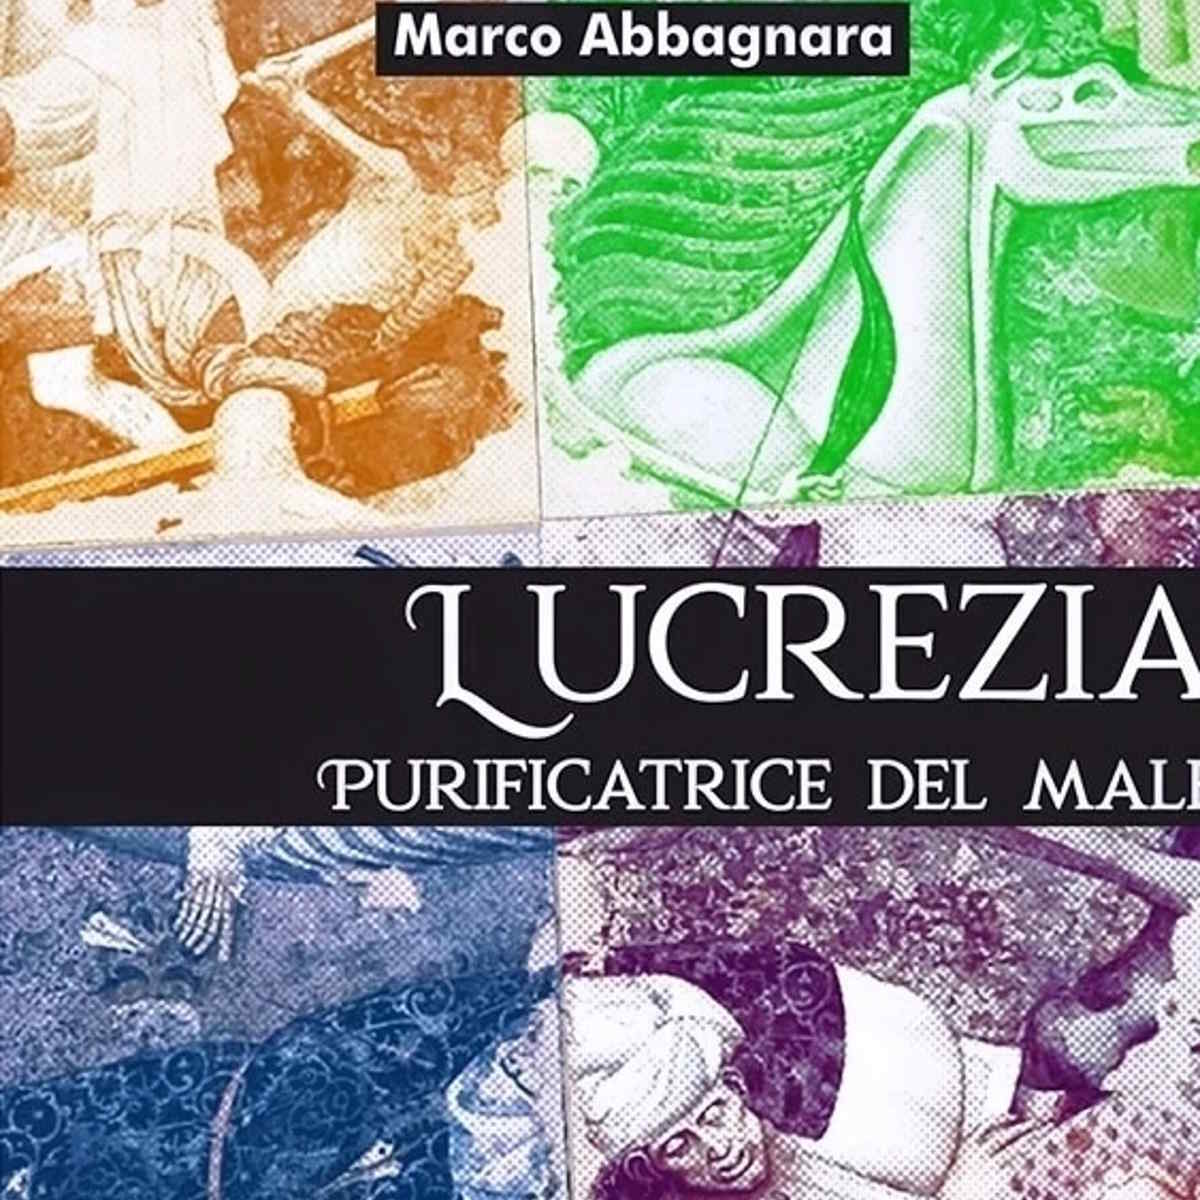 Marco Abbagnara - “Lucrezia. Purificatrice del male”